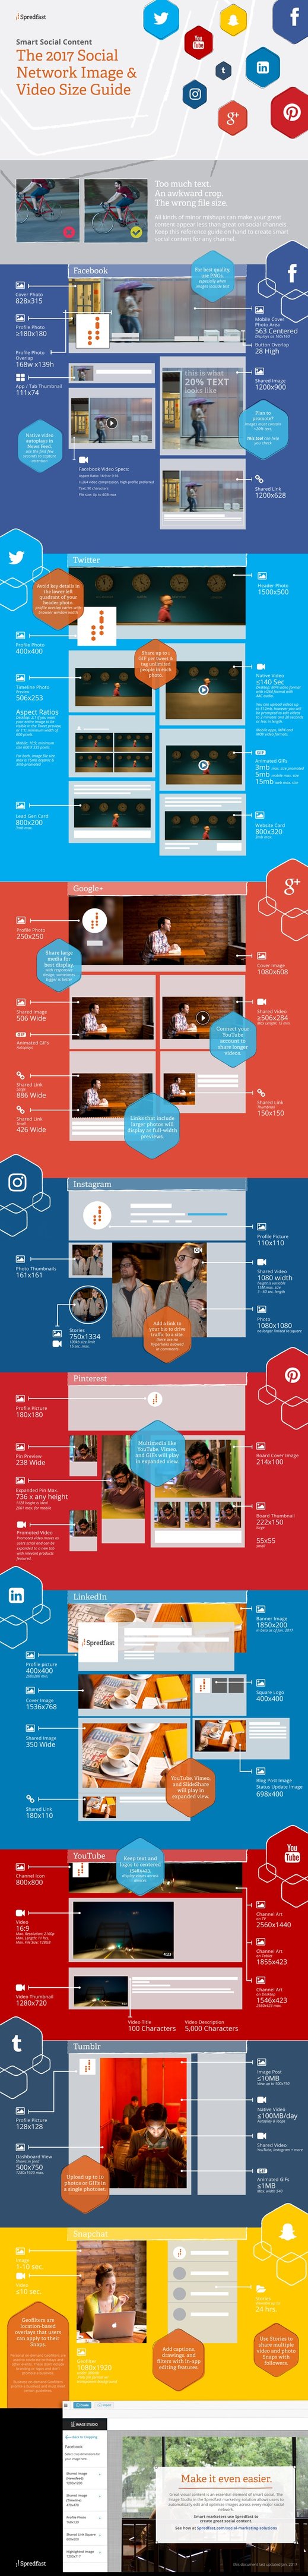 2017-sizing-for-social-media-infographic-tip-sheet-by-spredfast.jpg